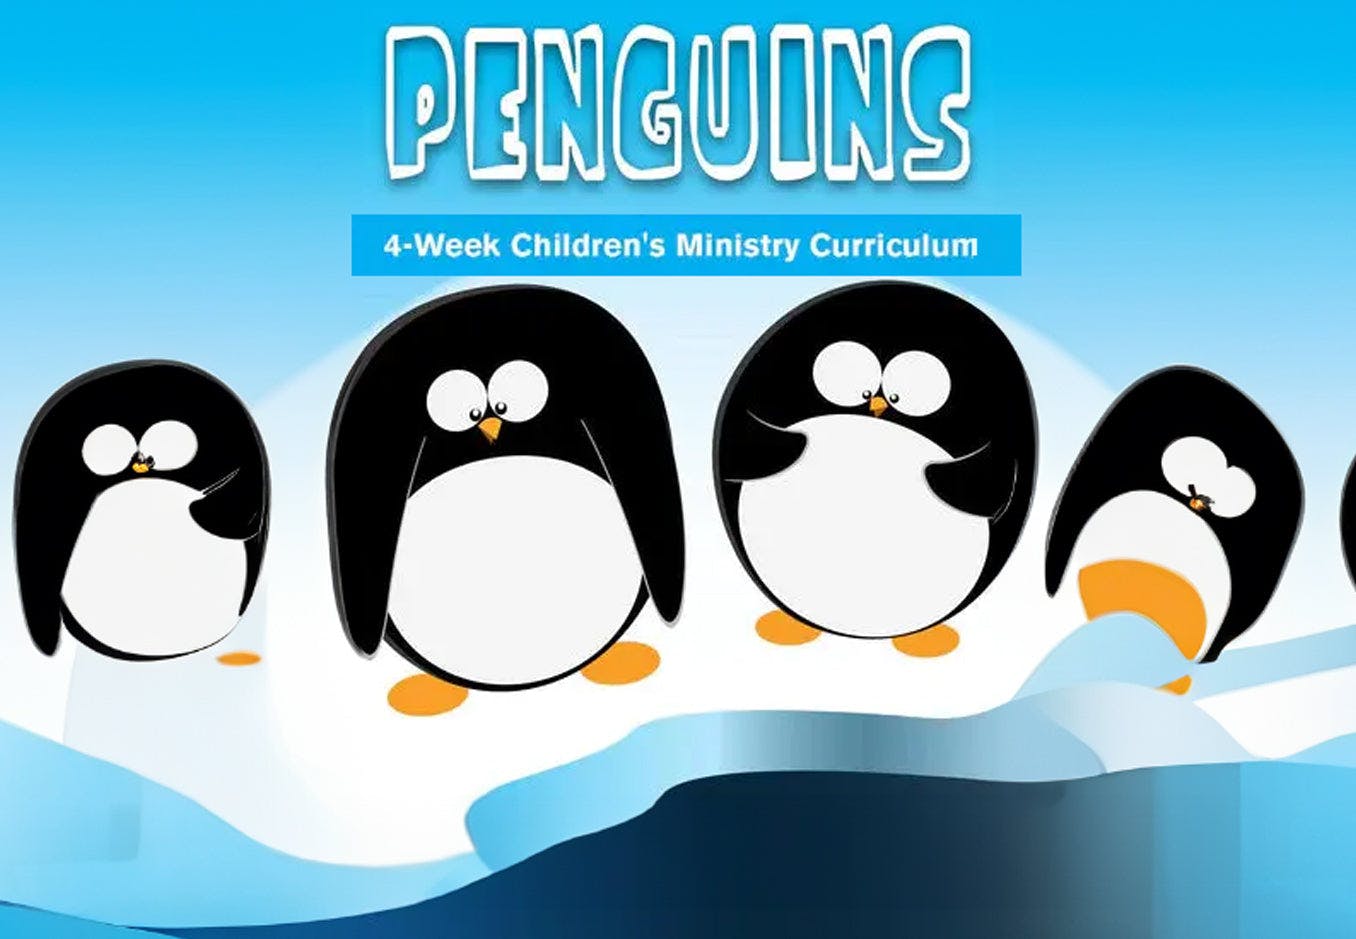 Penguins 4-Week Children's Ministry Curriculum